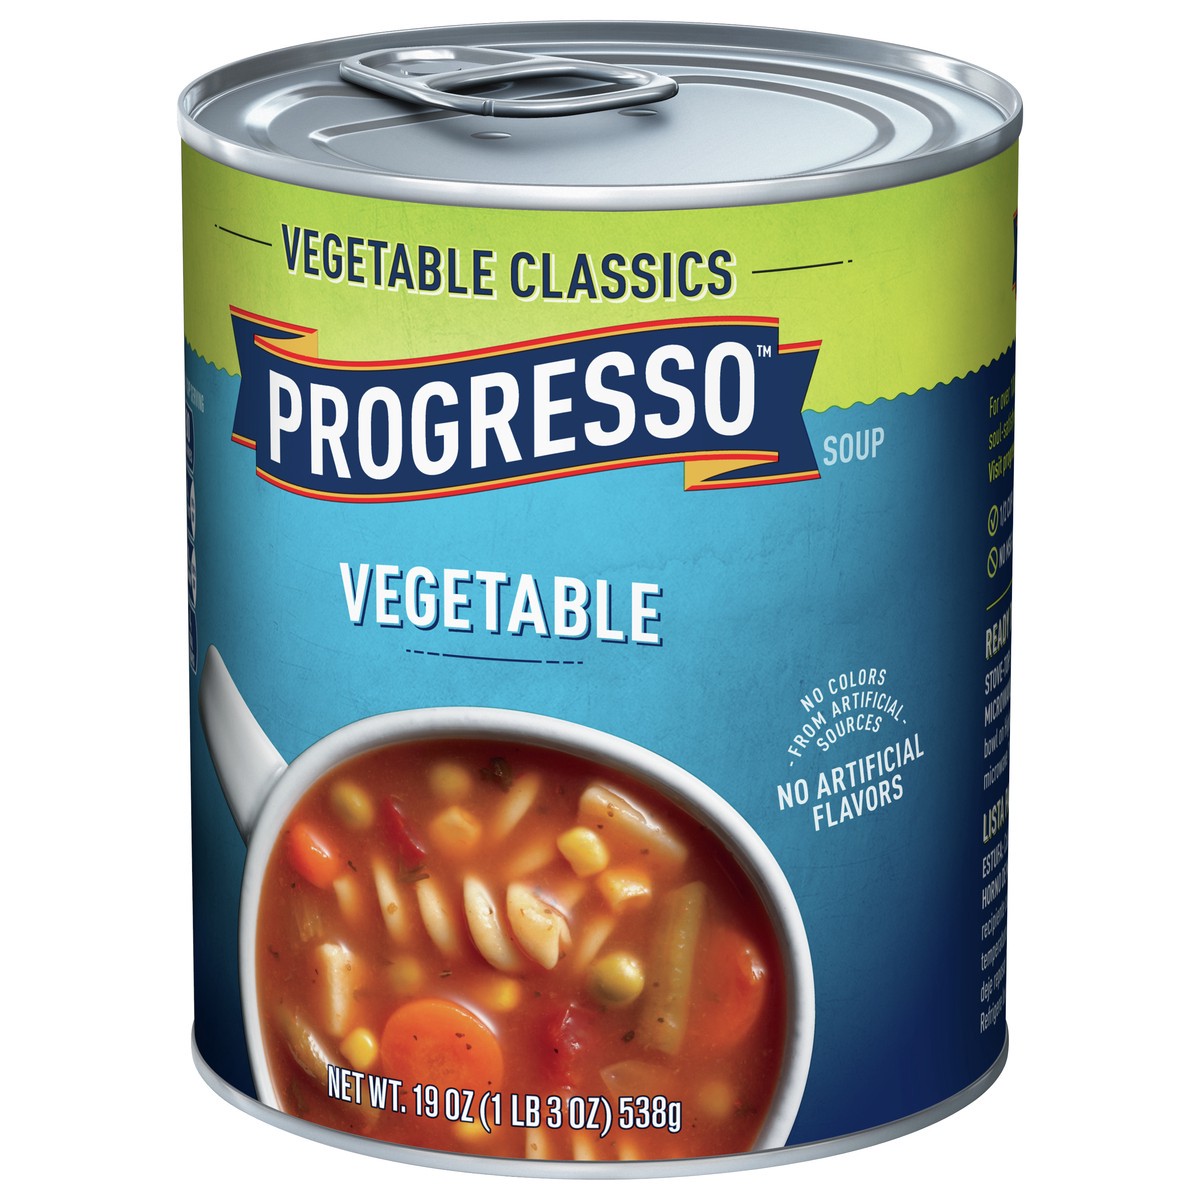 slide 3 of 9, Progresso Vegetable Soup, Vegetable Classics Canned Soup, 19 oz, 19 oz